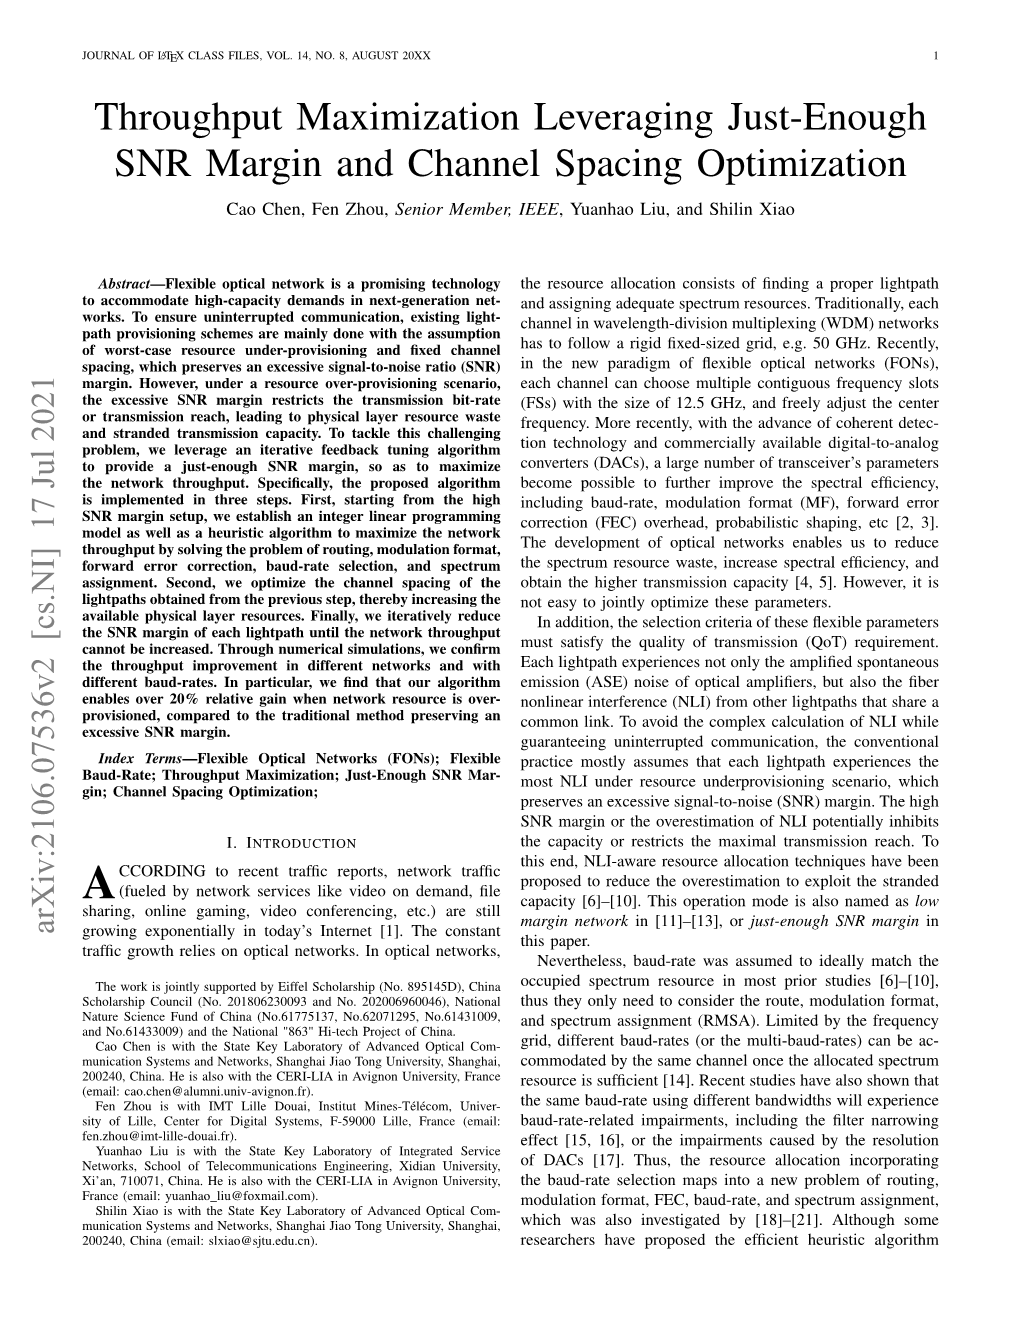 Throughput Maximization Leveraging Just-Enough SNR Margin and Channel Spacing Optimization Cao Chen, Fen Zhou, Senior Member, IEEE, Yuanhao Liu, and Shilin Xiao